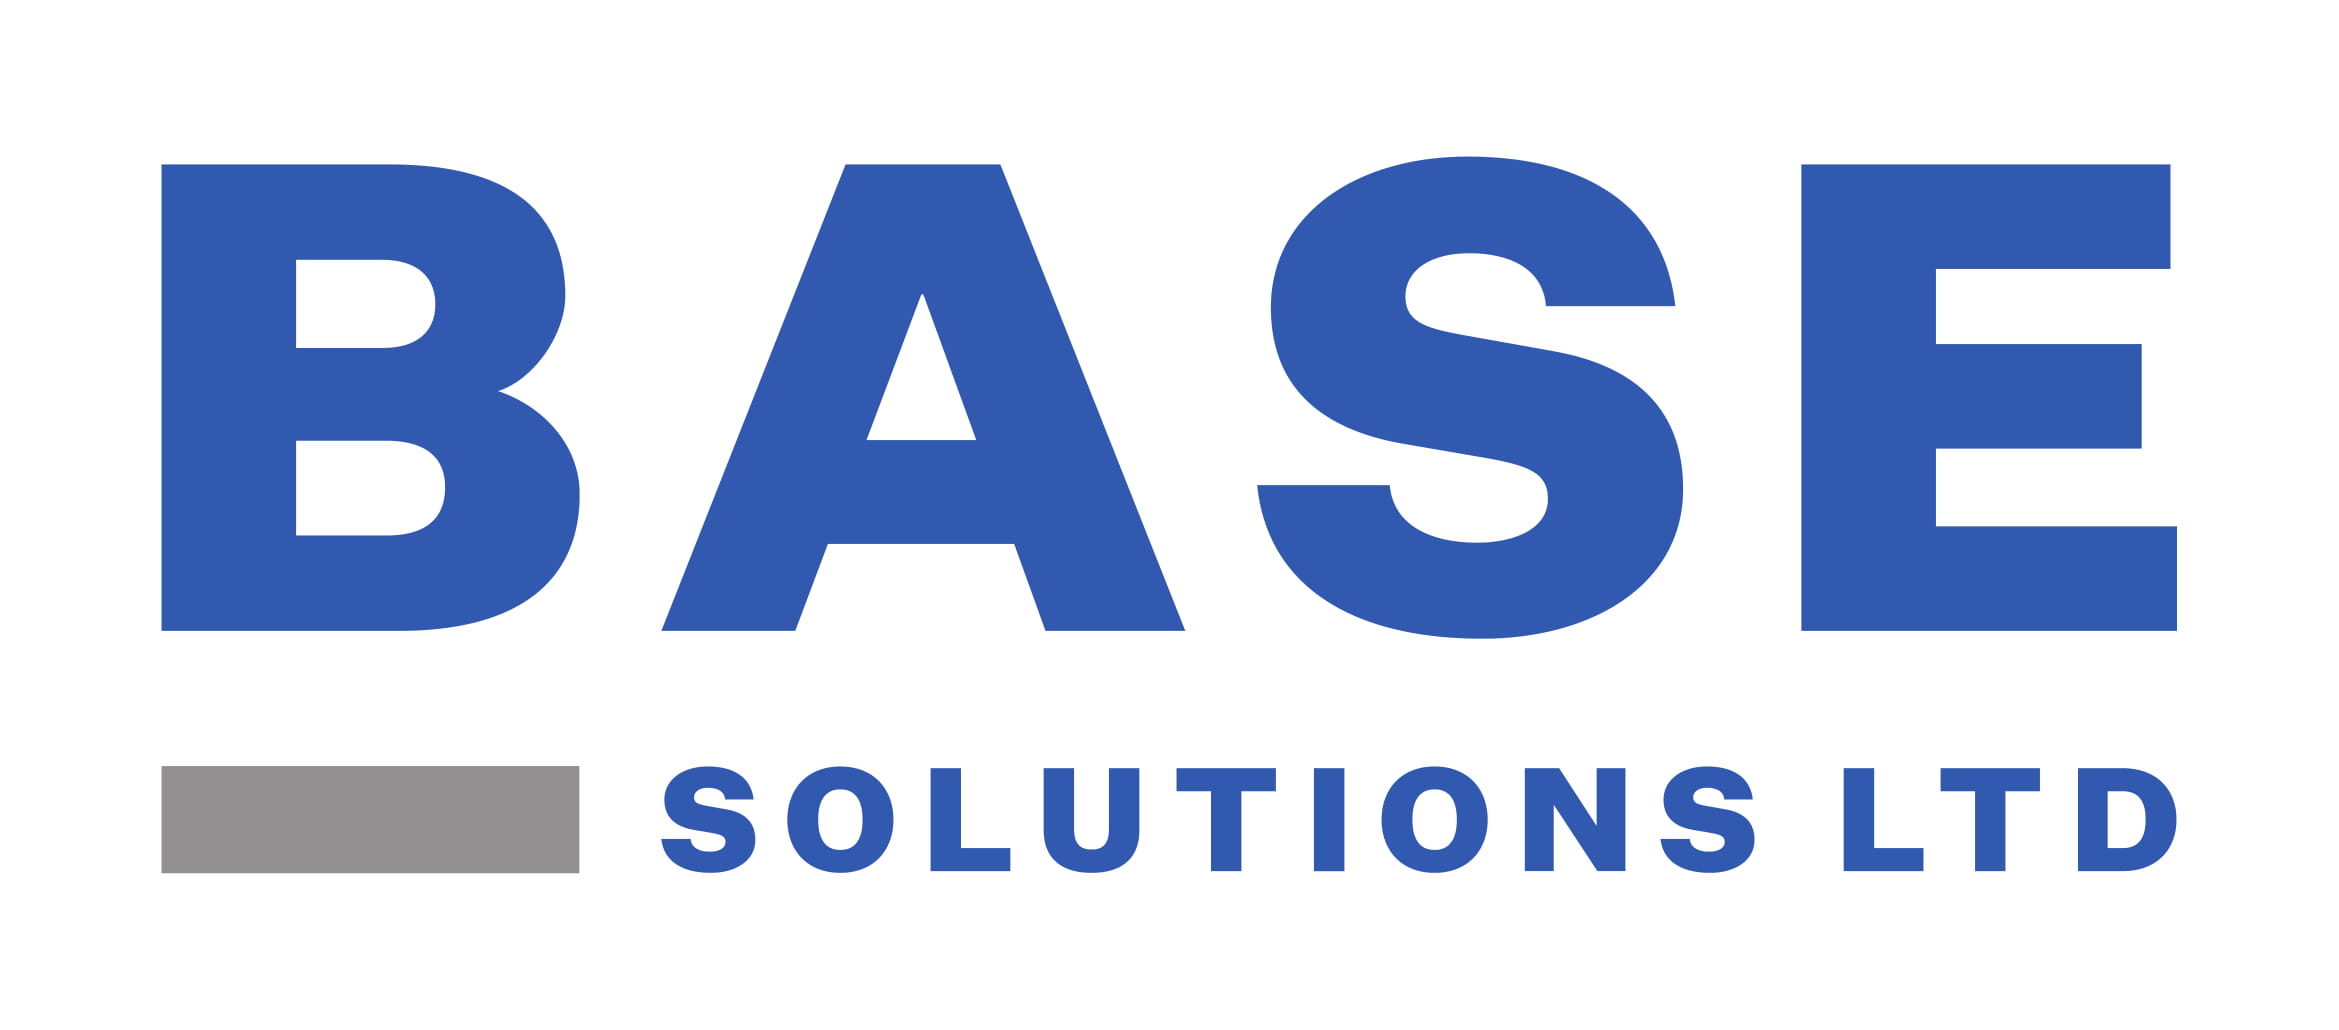 BASE Solutions Ltd logo main 1